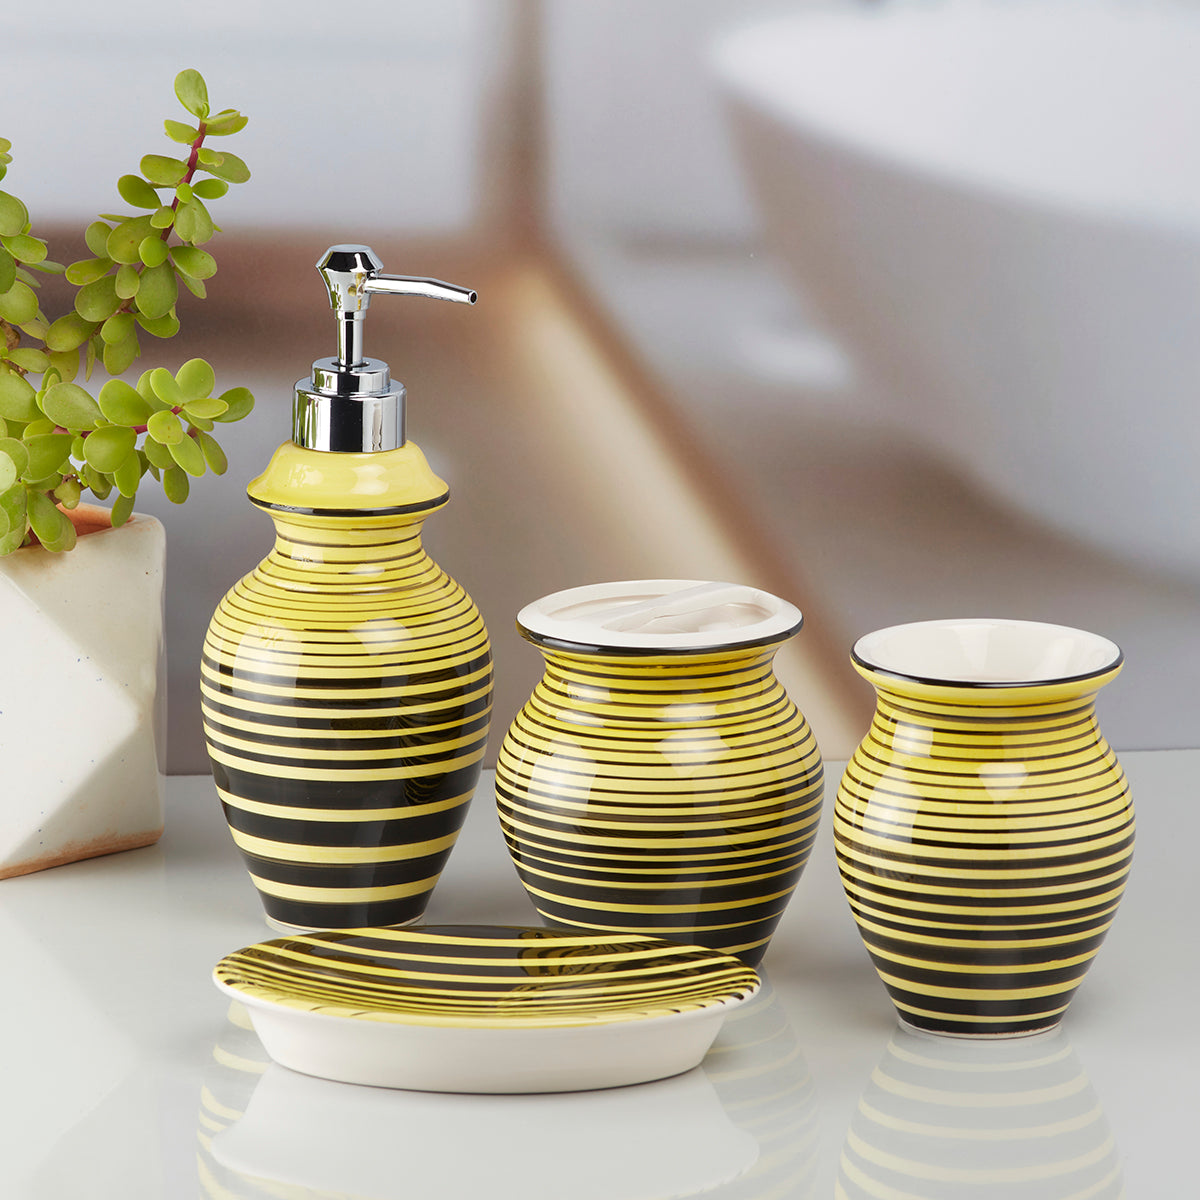 Ceramic Bathroom Accessories Set of 4 Bath Set with Soap Dispenser (10187)